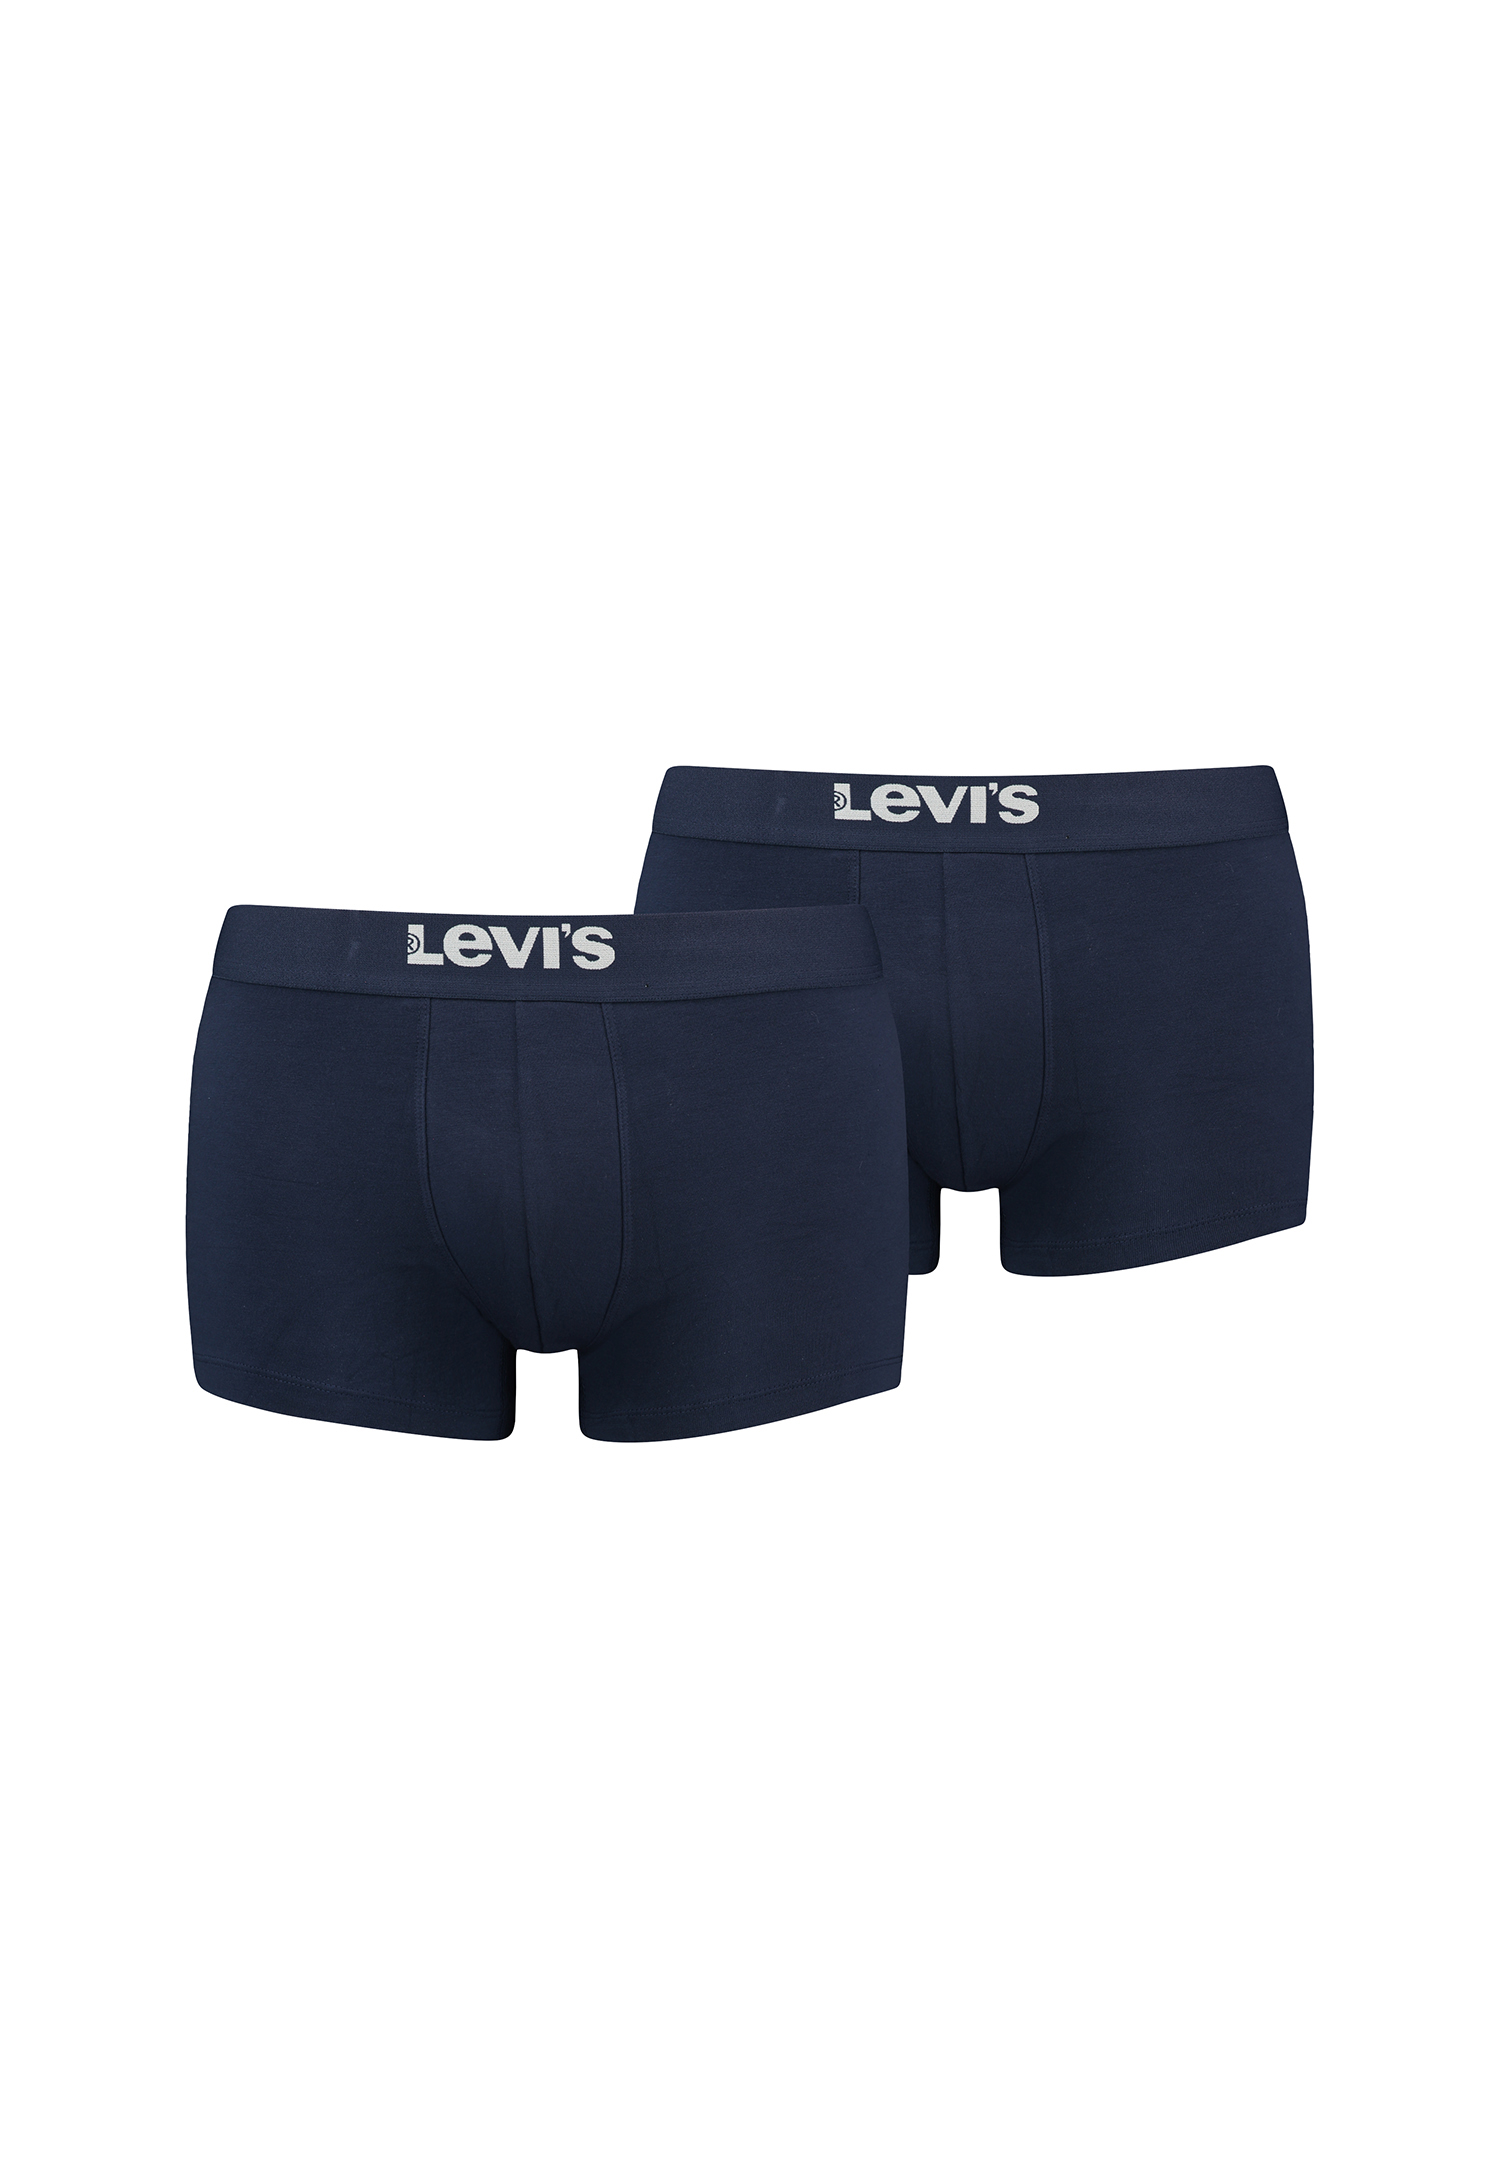 Levi's Mens Men's Solid Basic (6 Pack) Trunks, Black, L